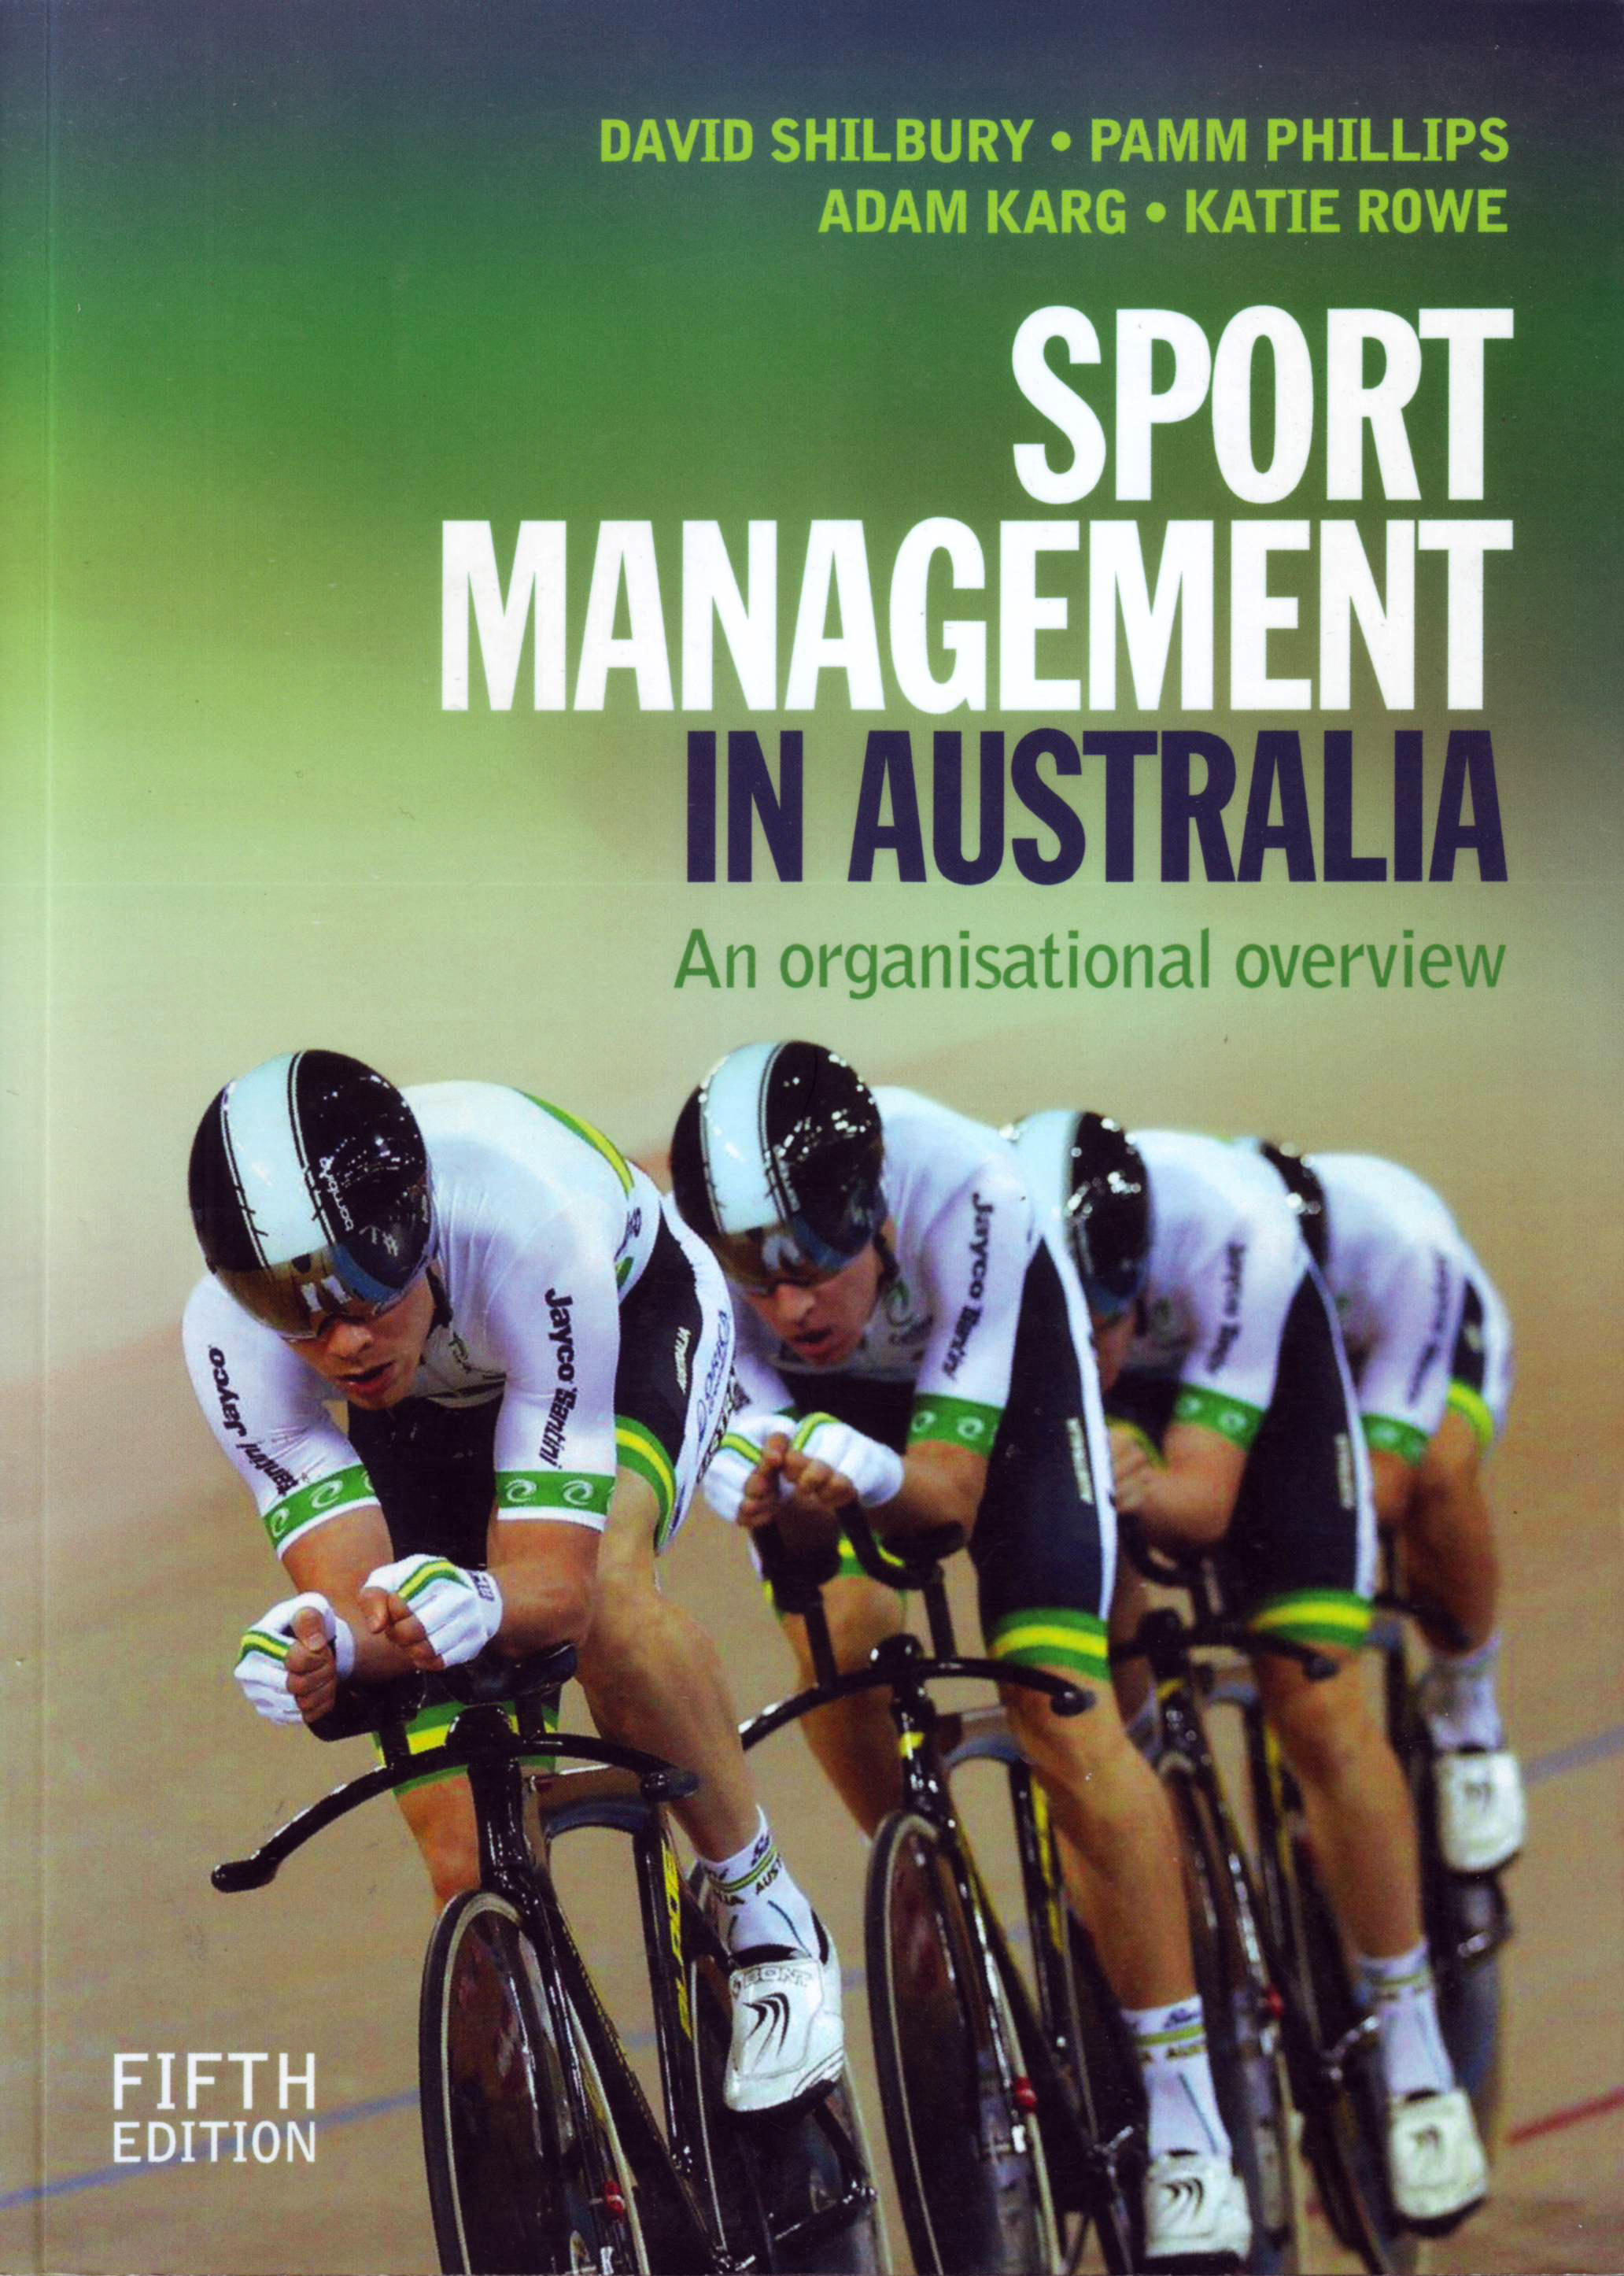 Sport Management in Australia e5